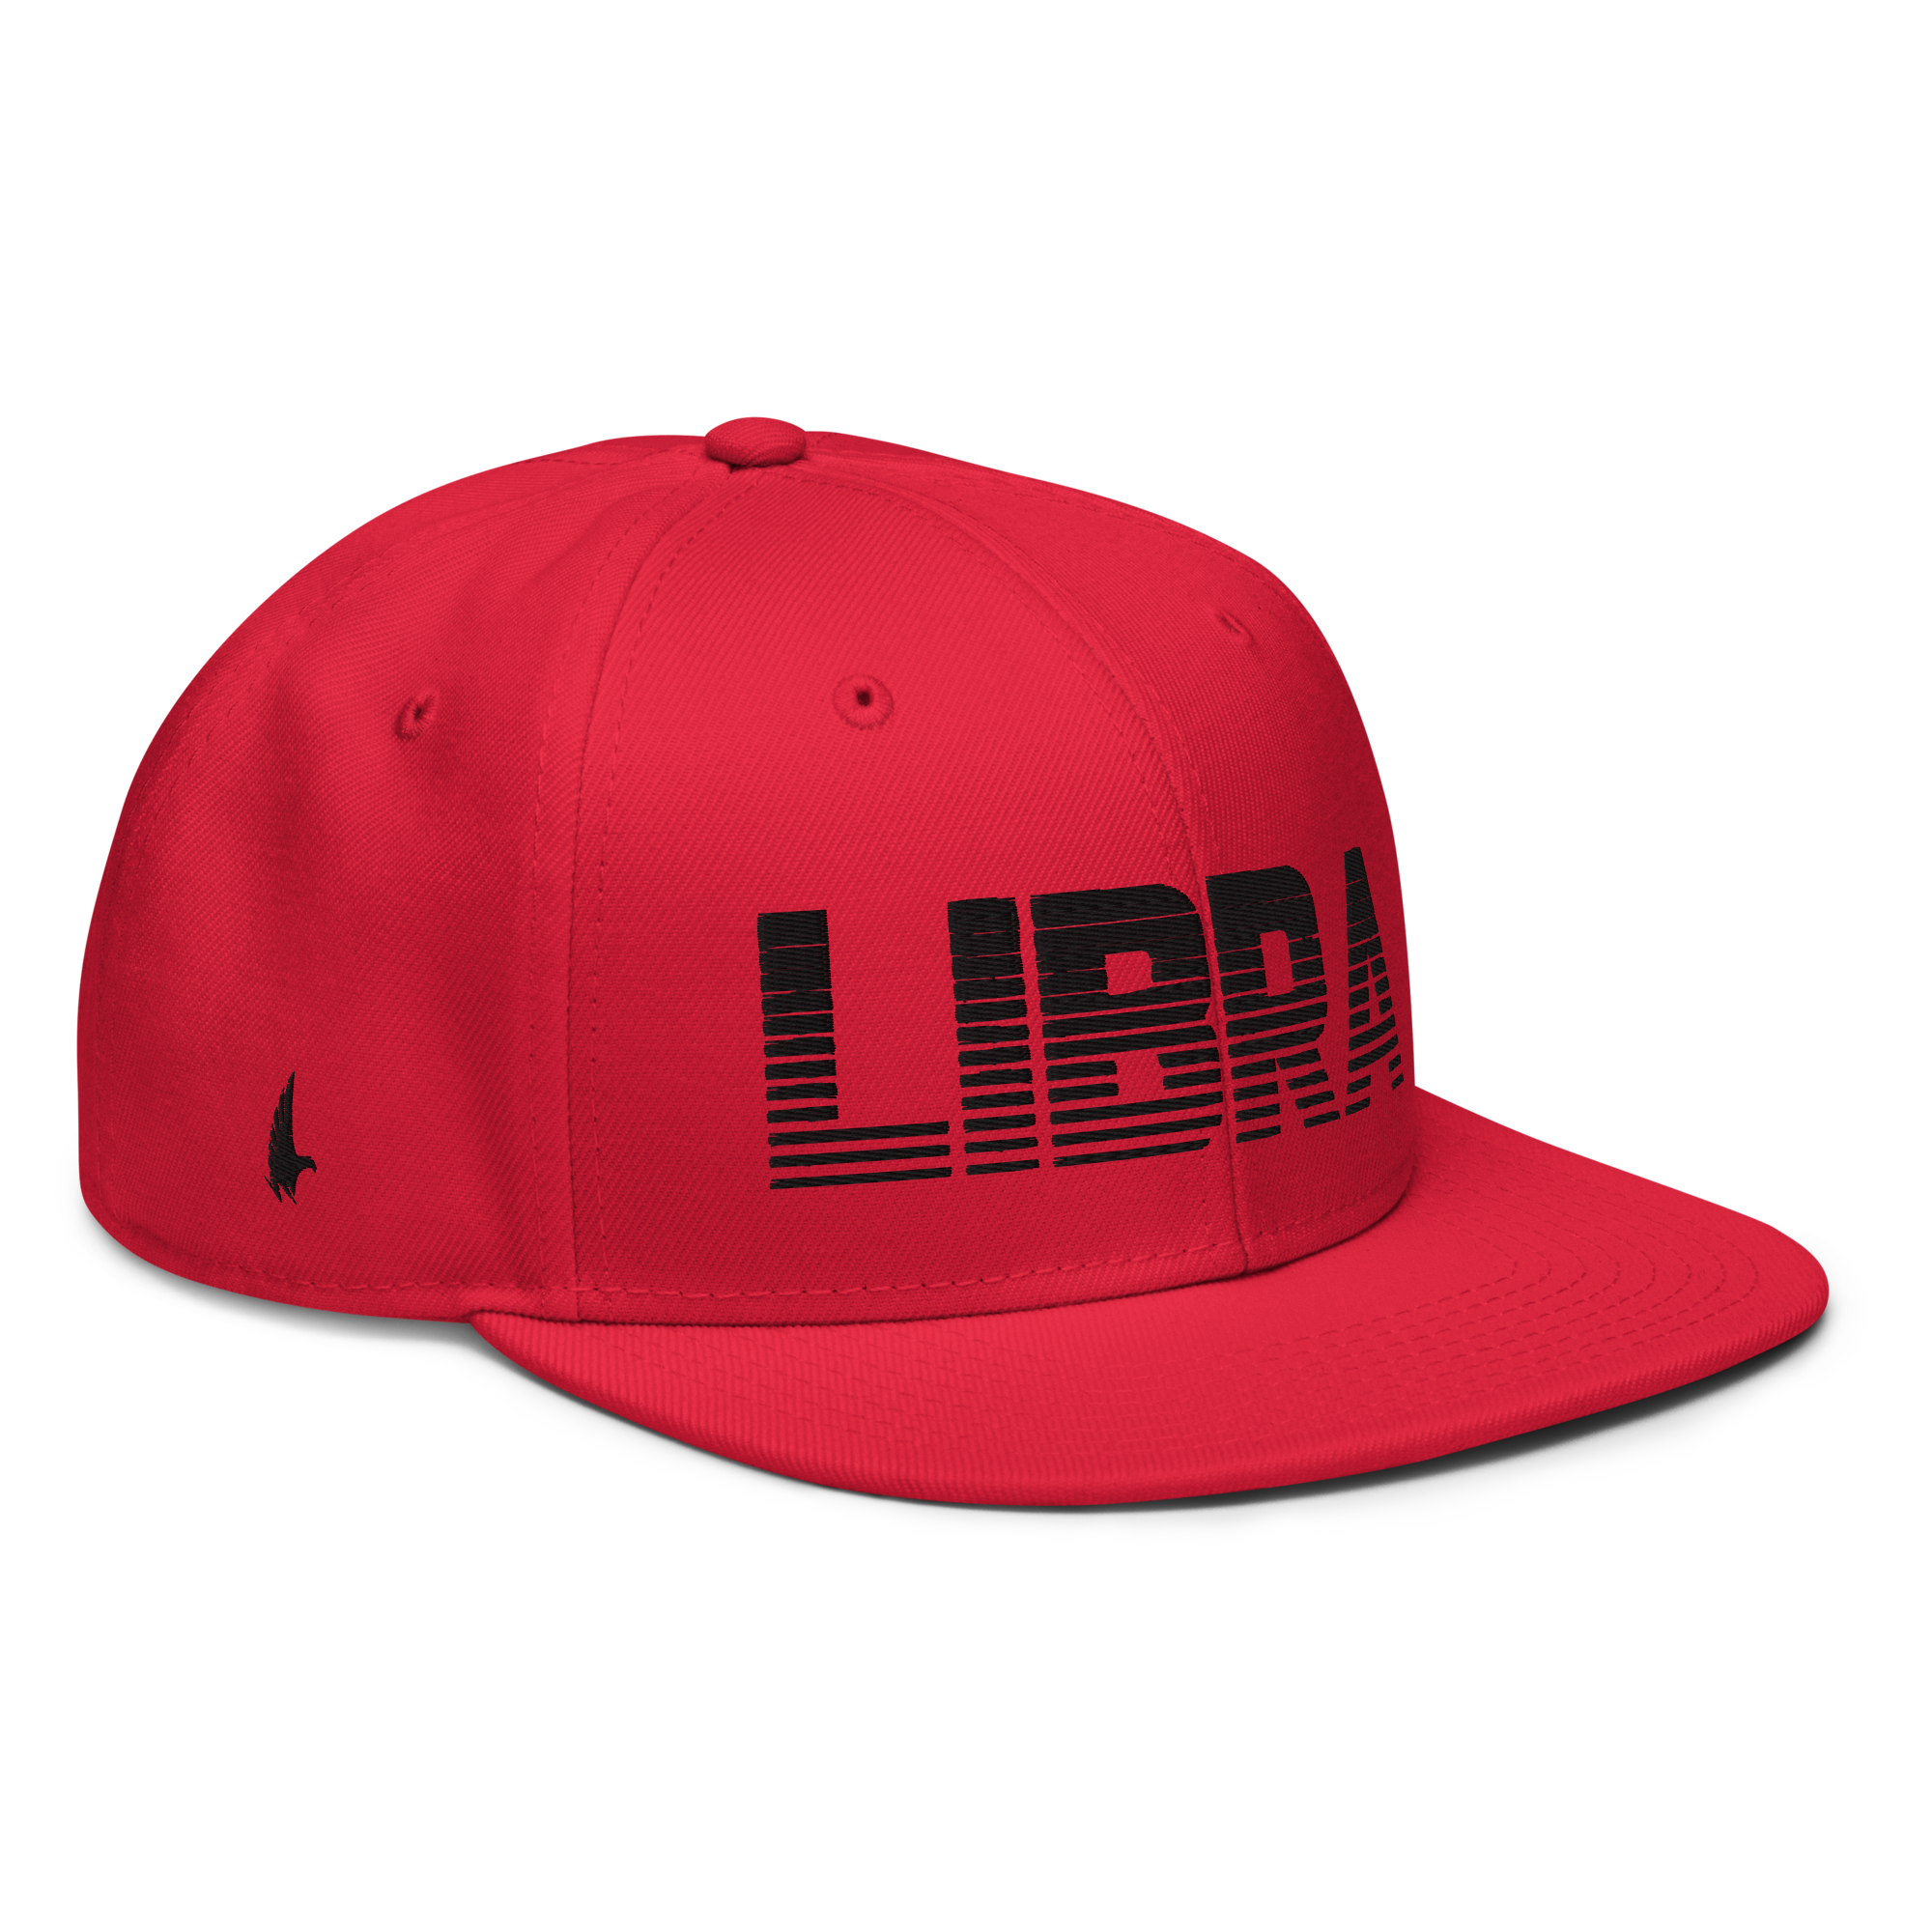 Libra Snapback Hat - Red / Black - Loyalty Vibes